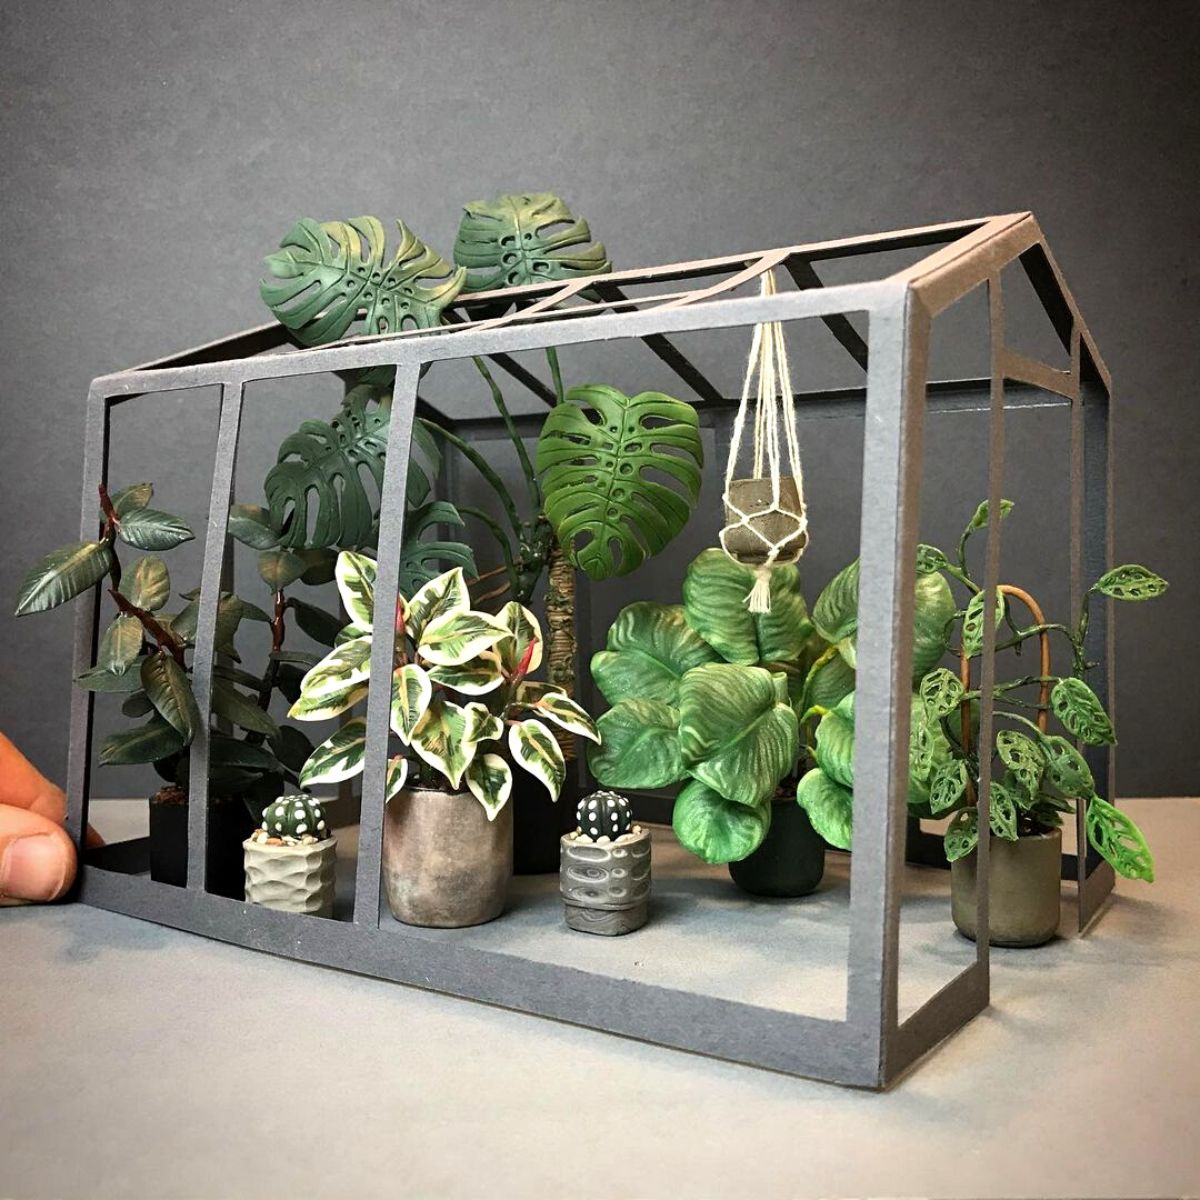 Miniature clay plants greenhouse on Thursd